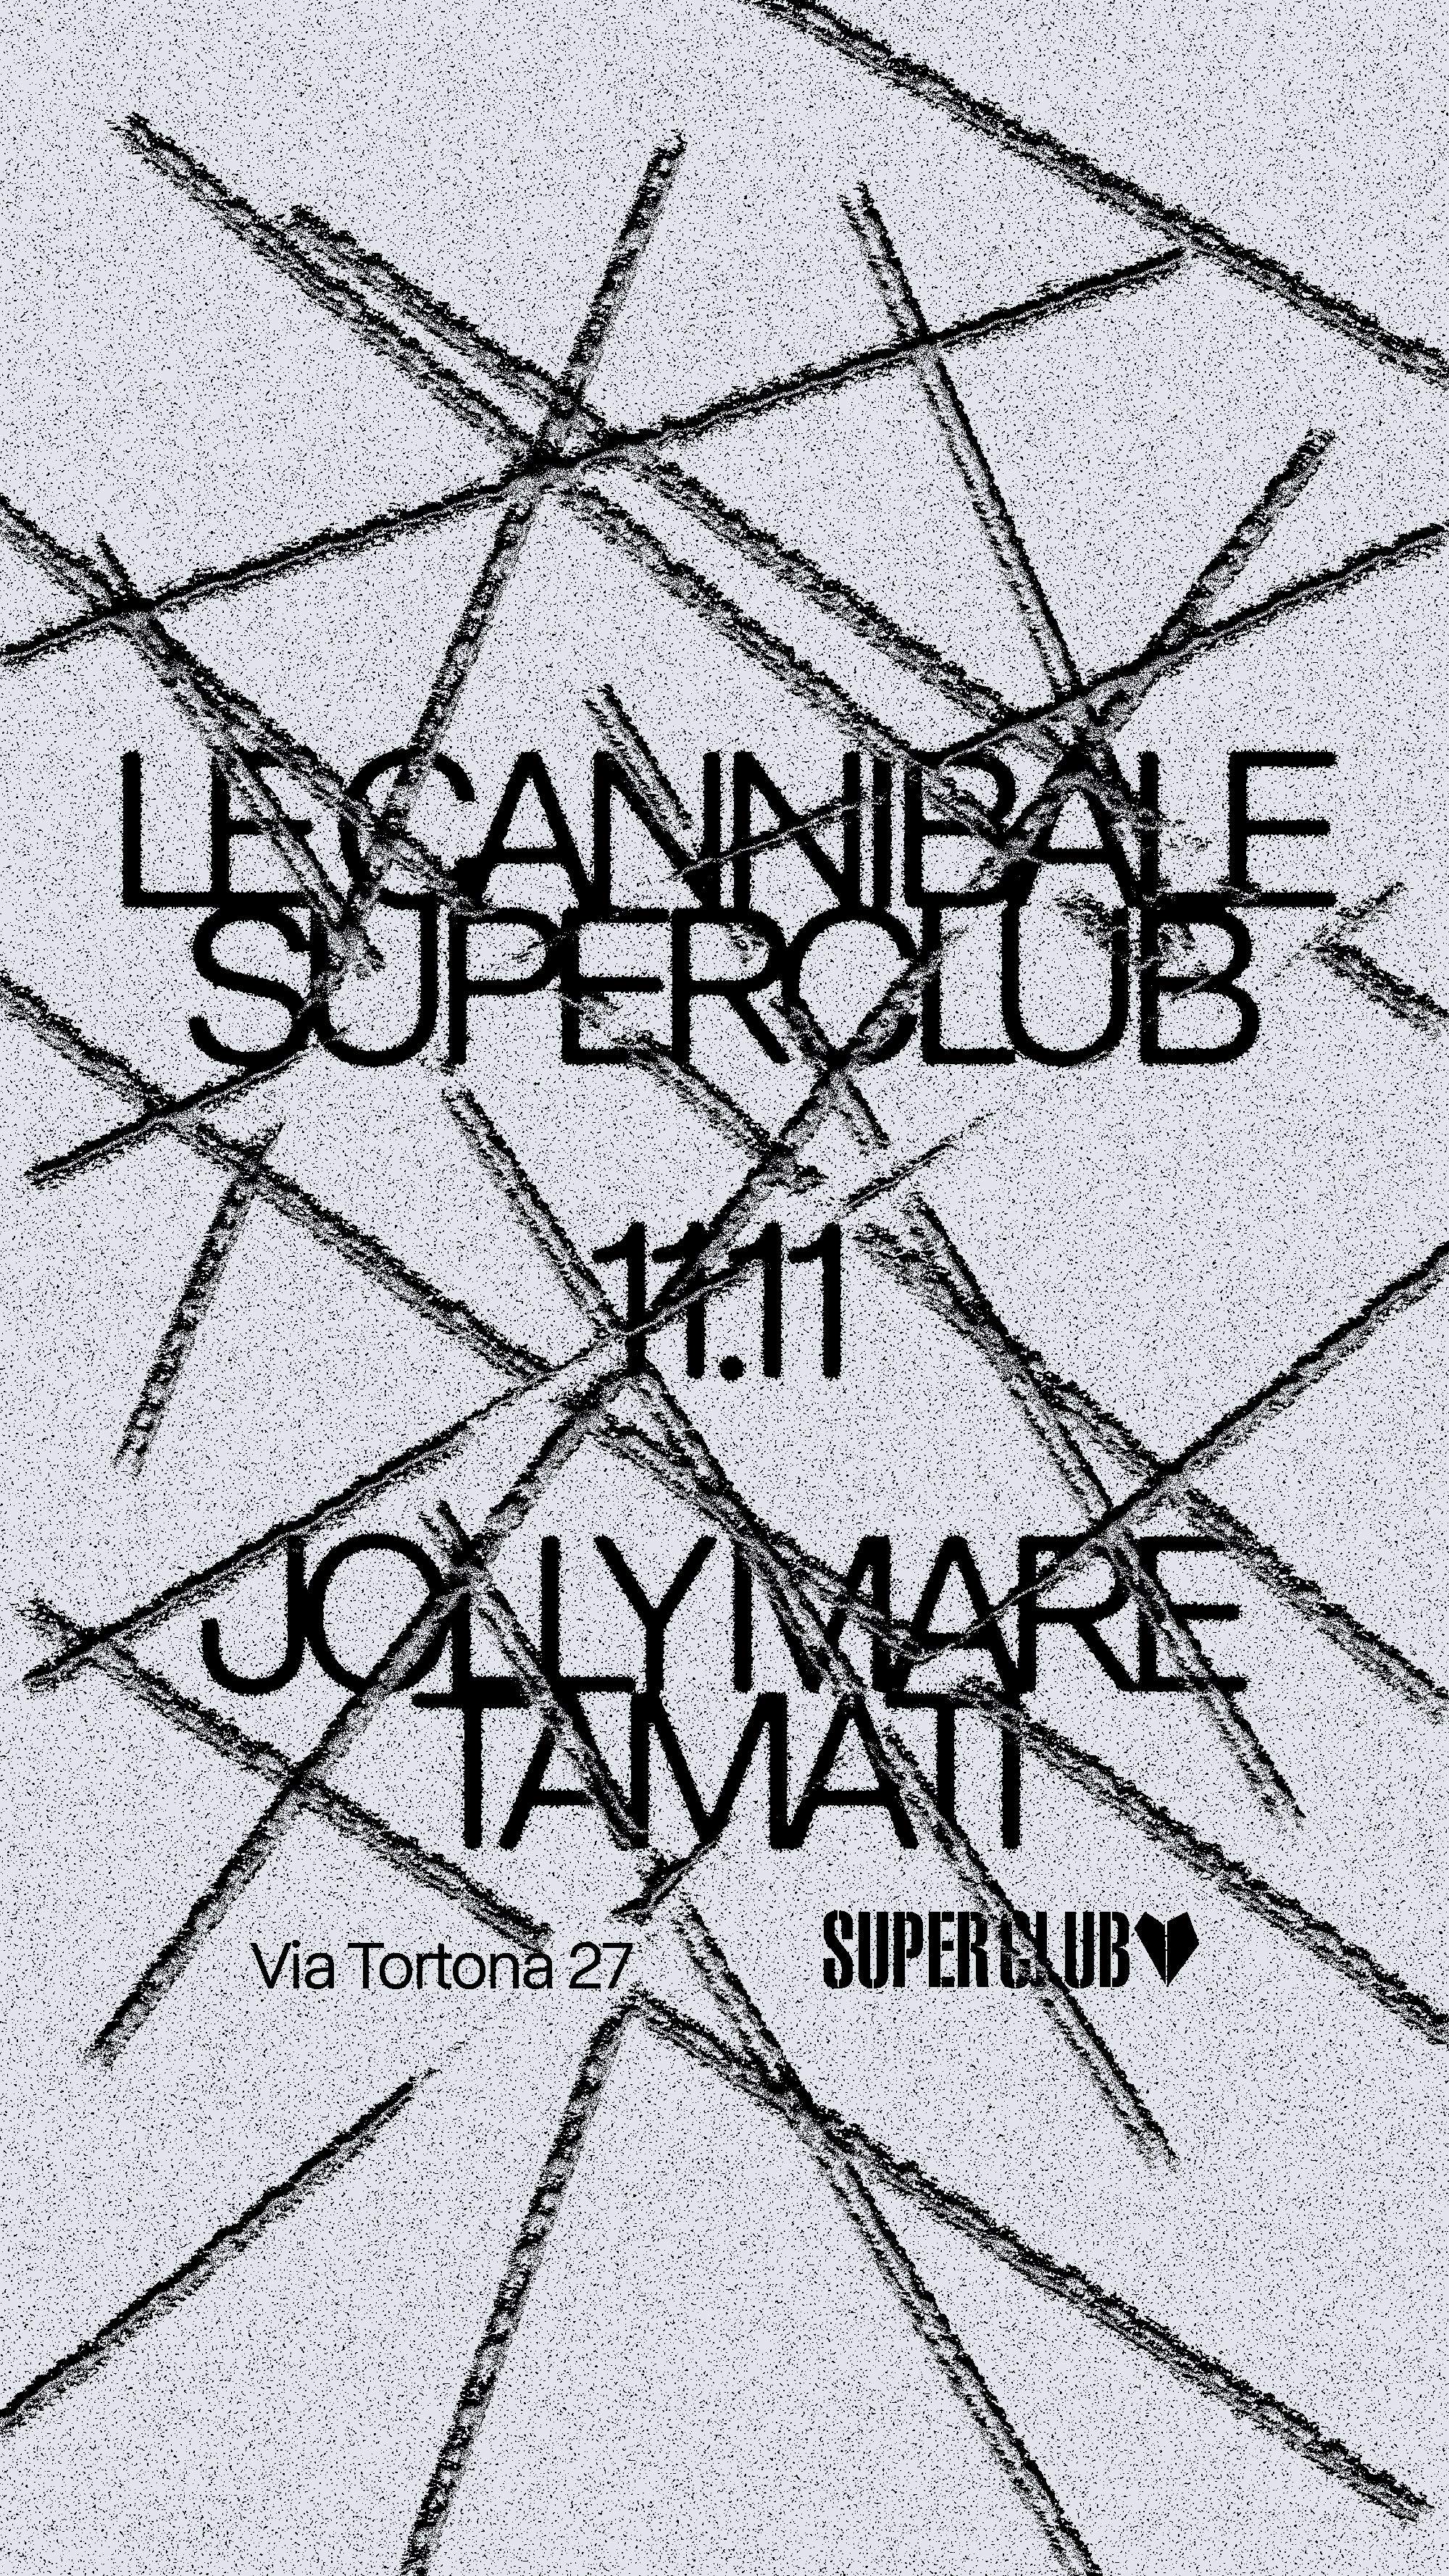 Le Cannibale Superclub - Jolly Mare, Tamati - Página trasera